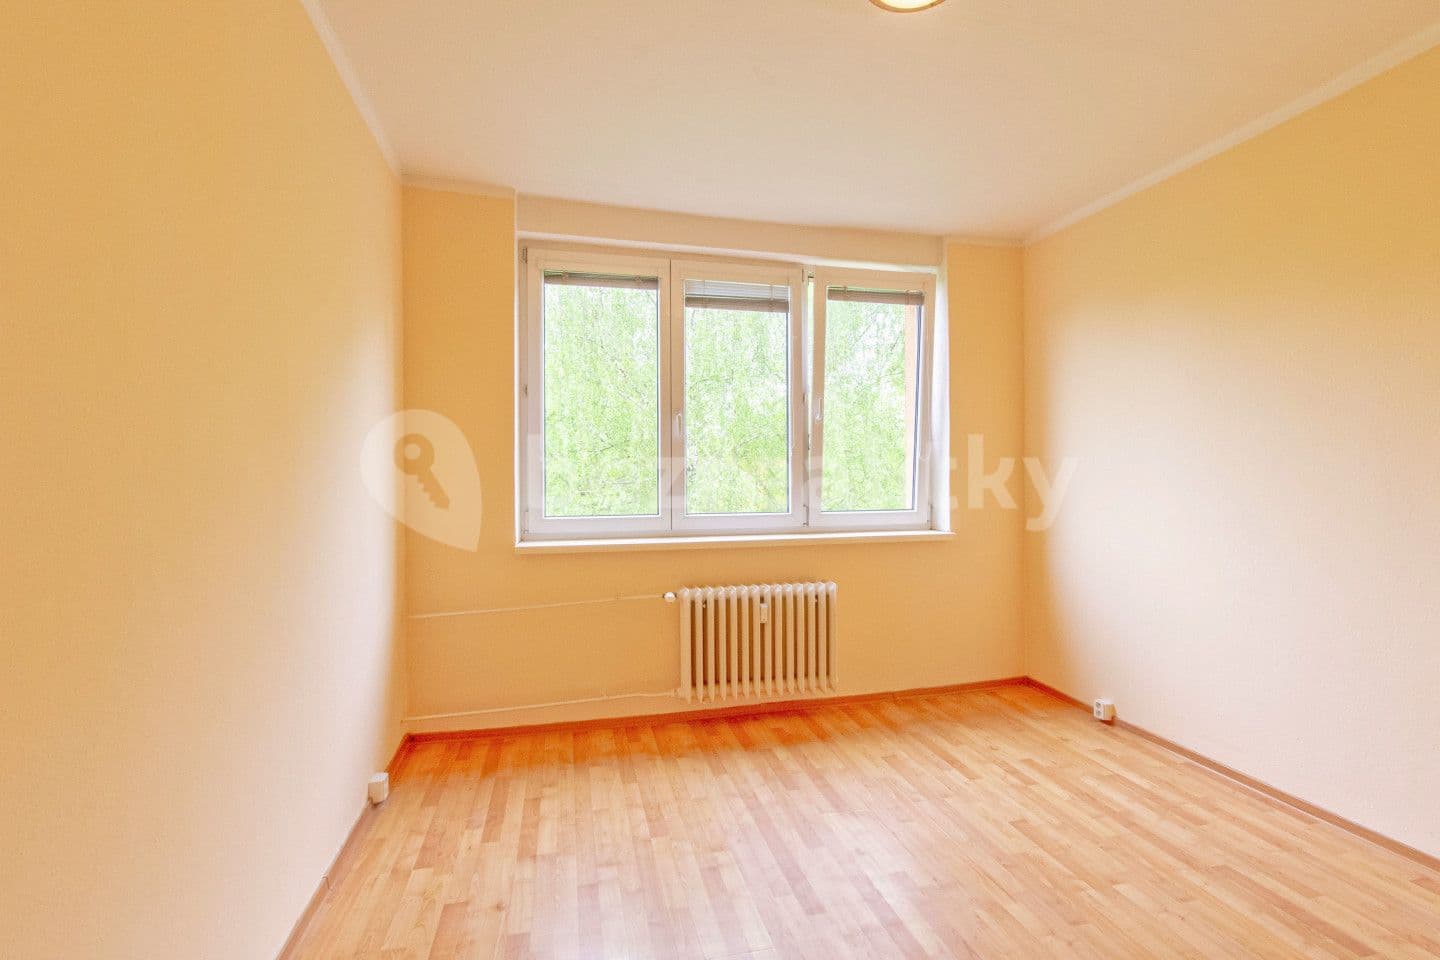 3 bedroom flat for sale, 72 m², Volgogradská, Ostrava, Moravskoslezský Region